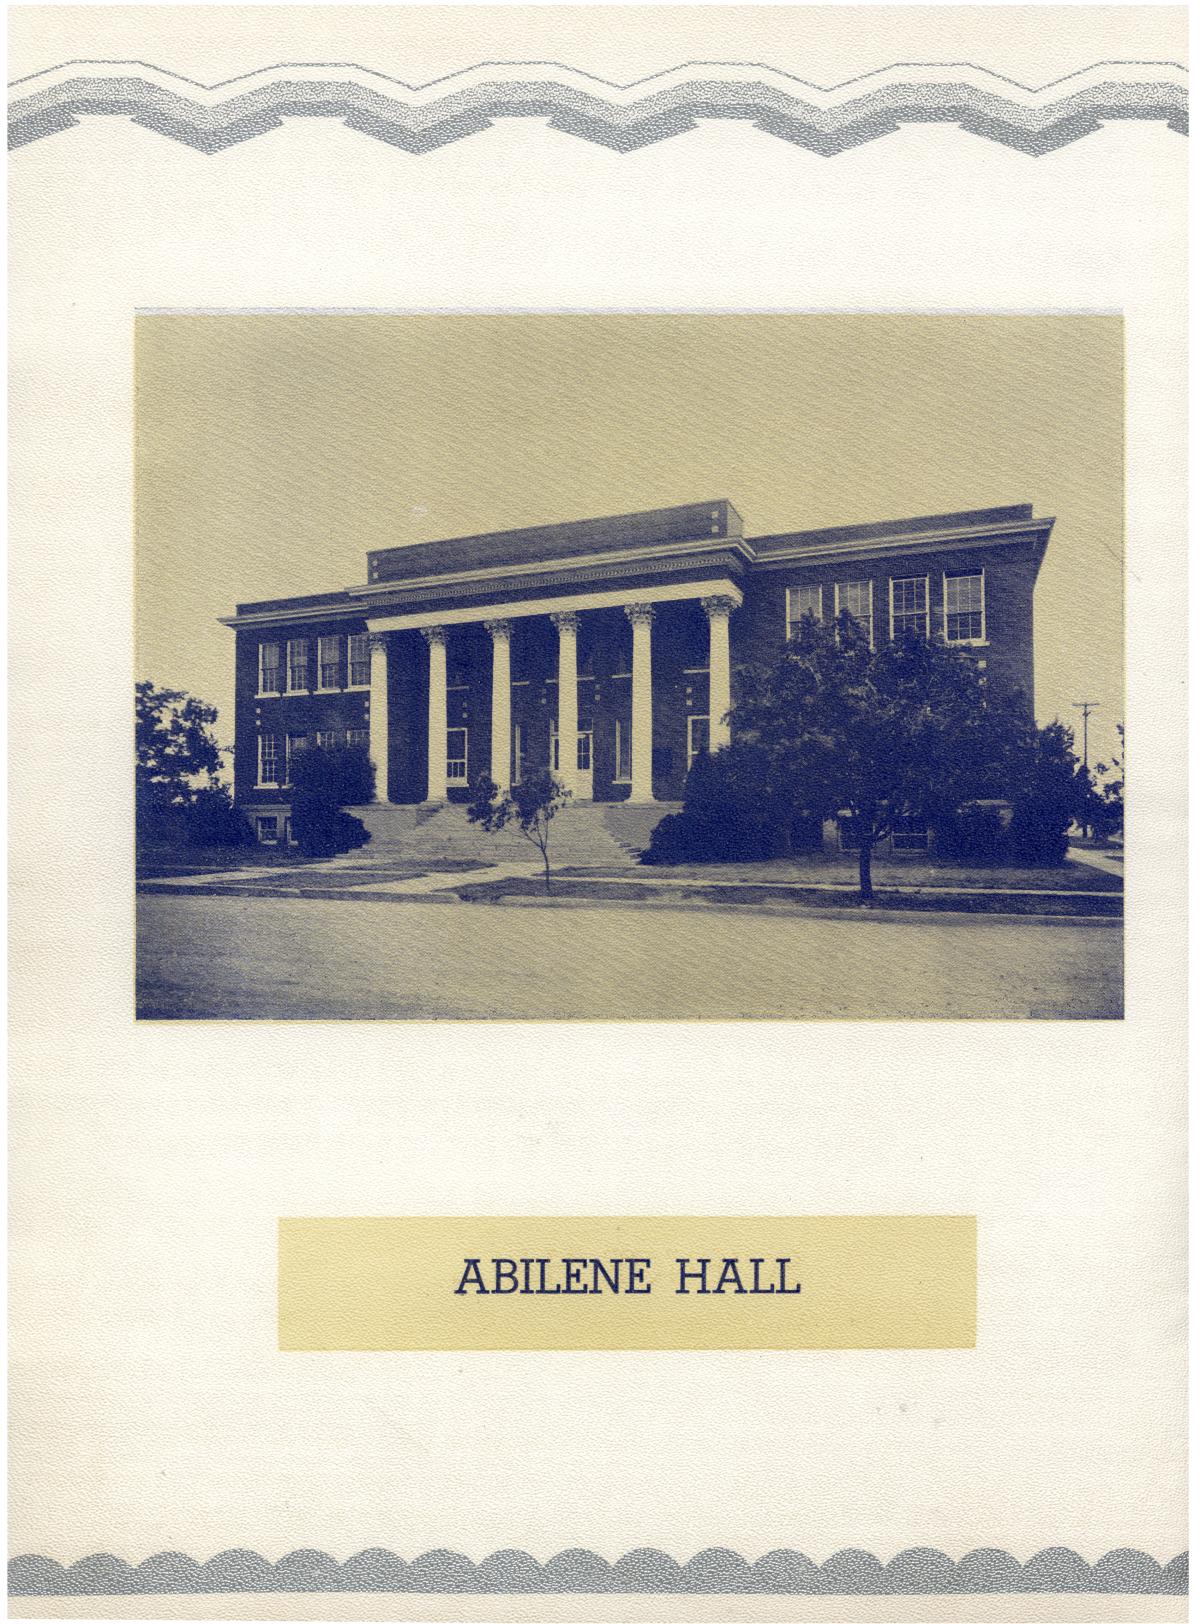 The Bronco, Yearbook of Hardin-Simmons University, 1935
                                                
                                                    8
                                                